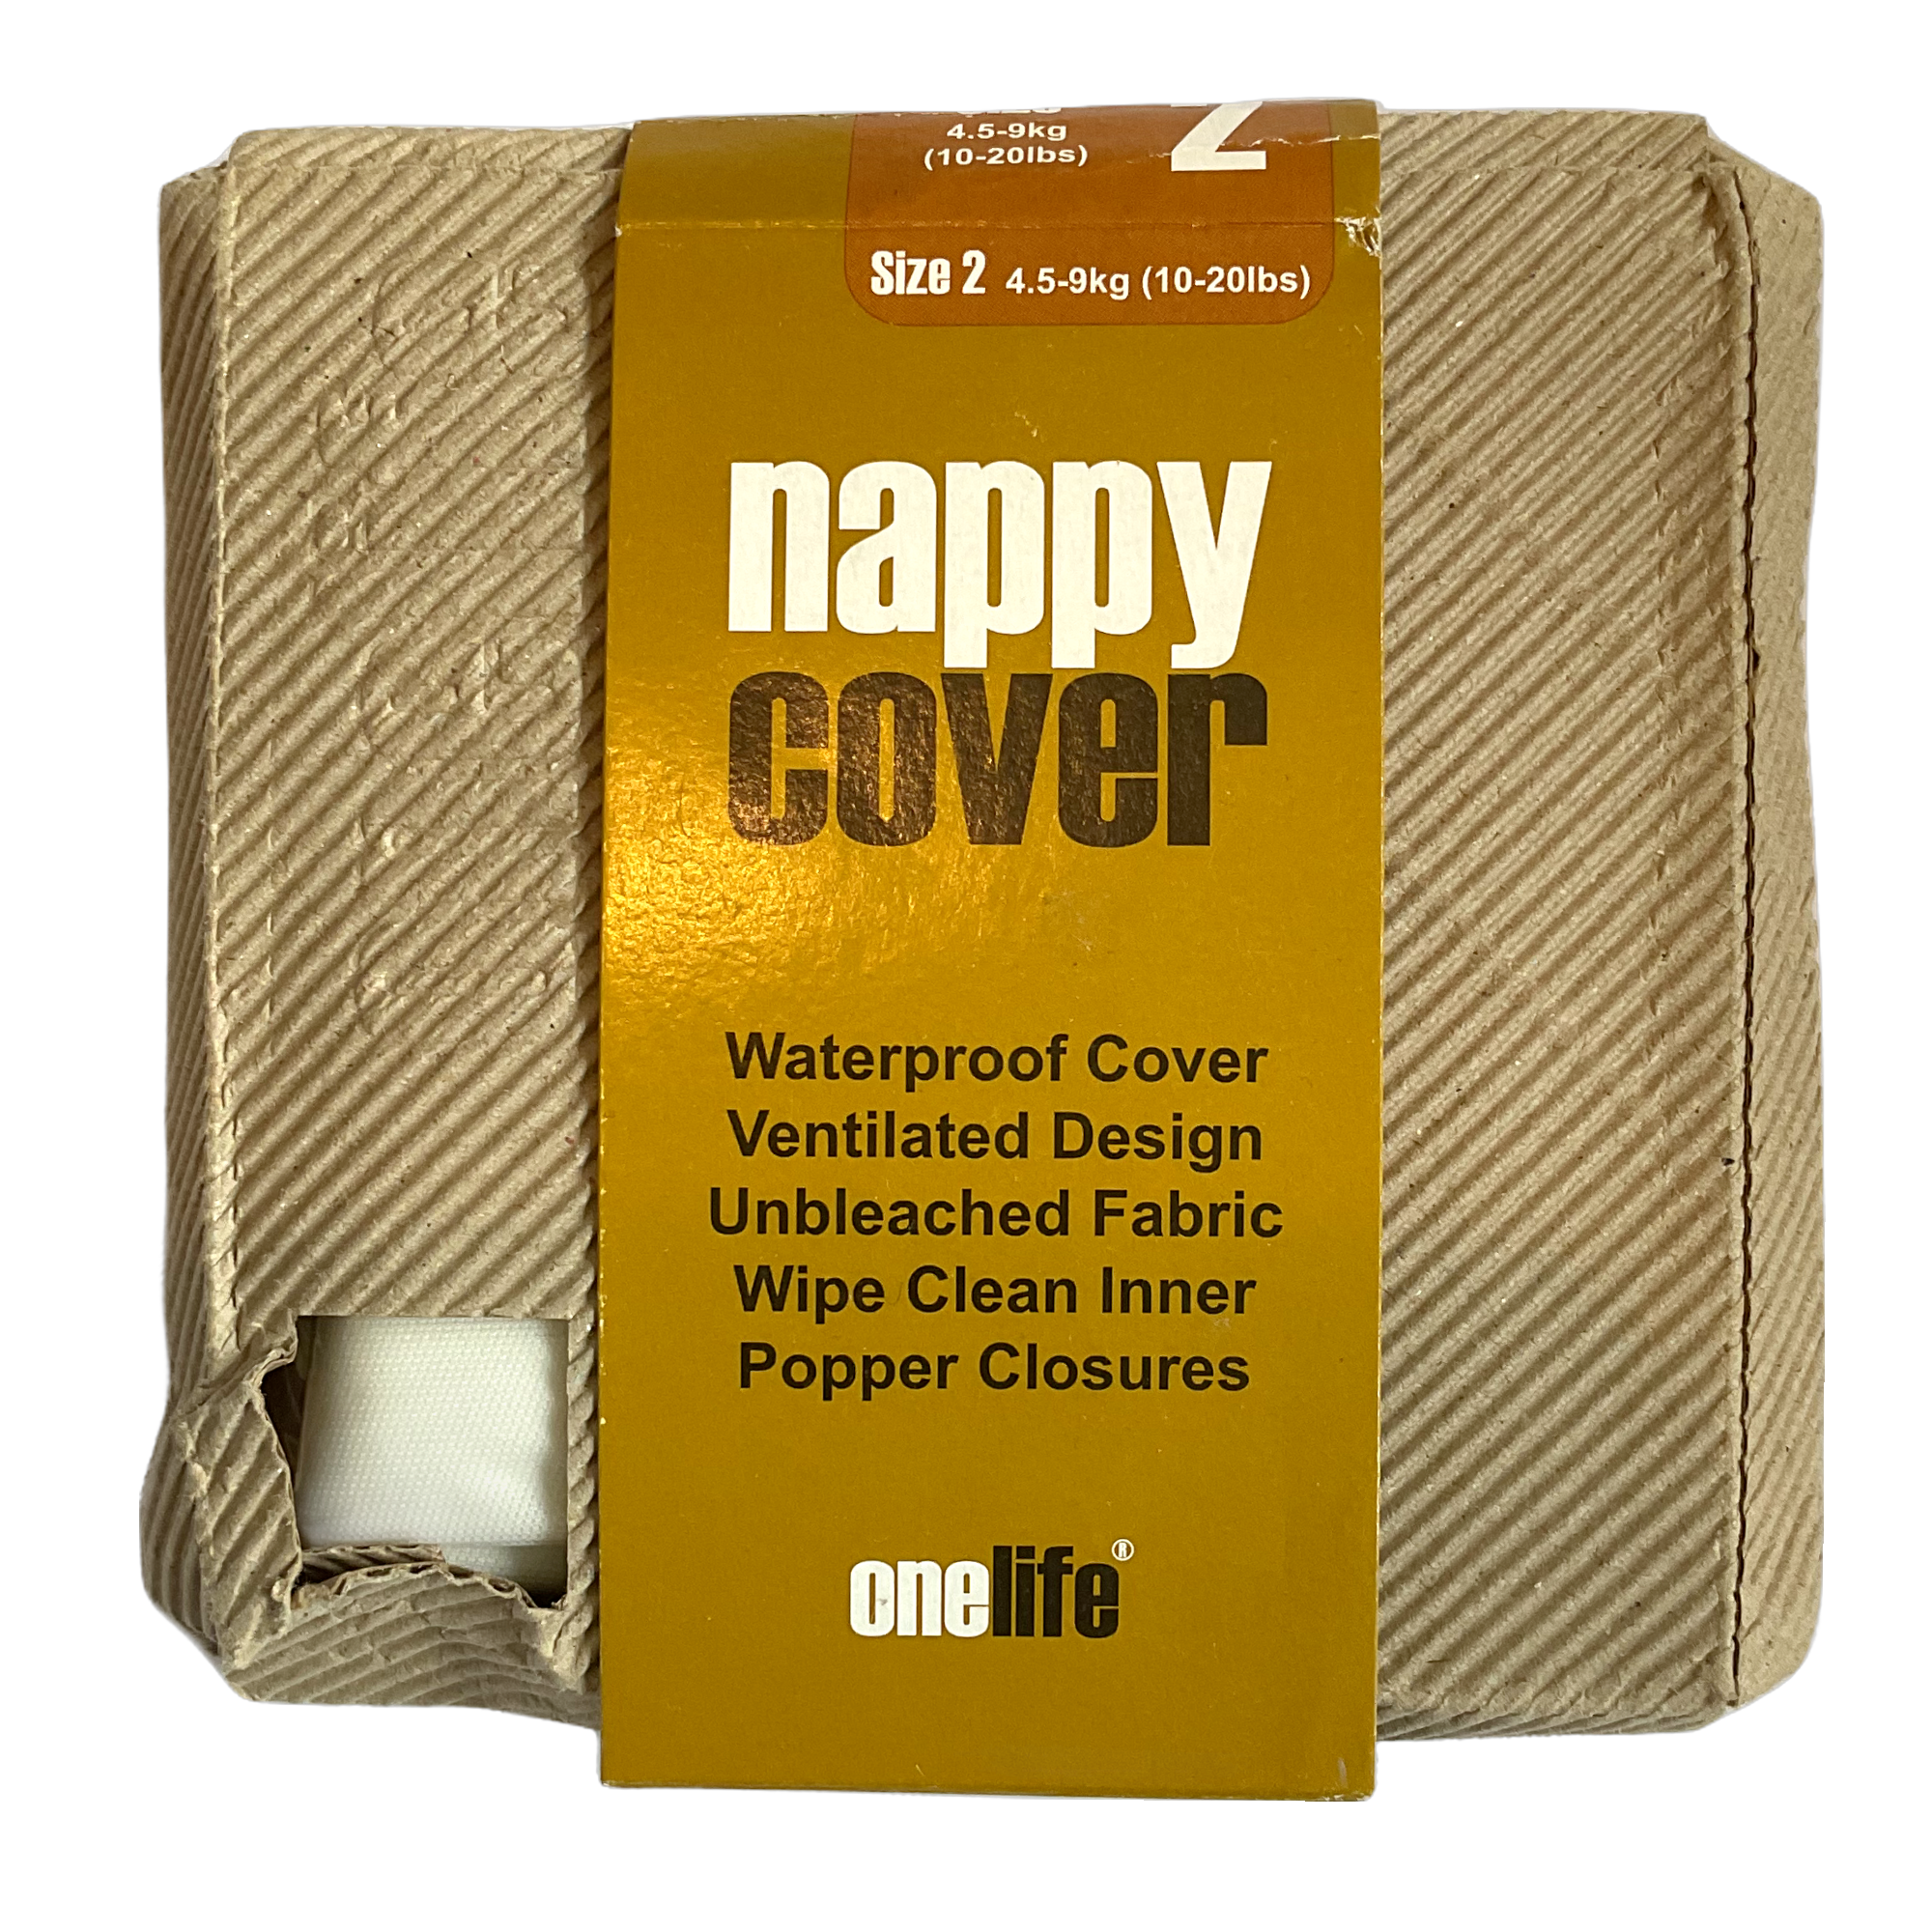 Nappy cover